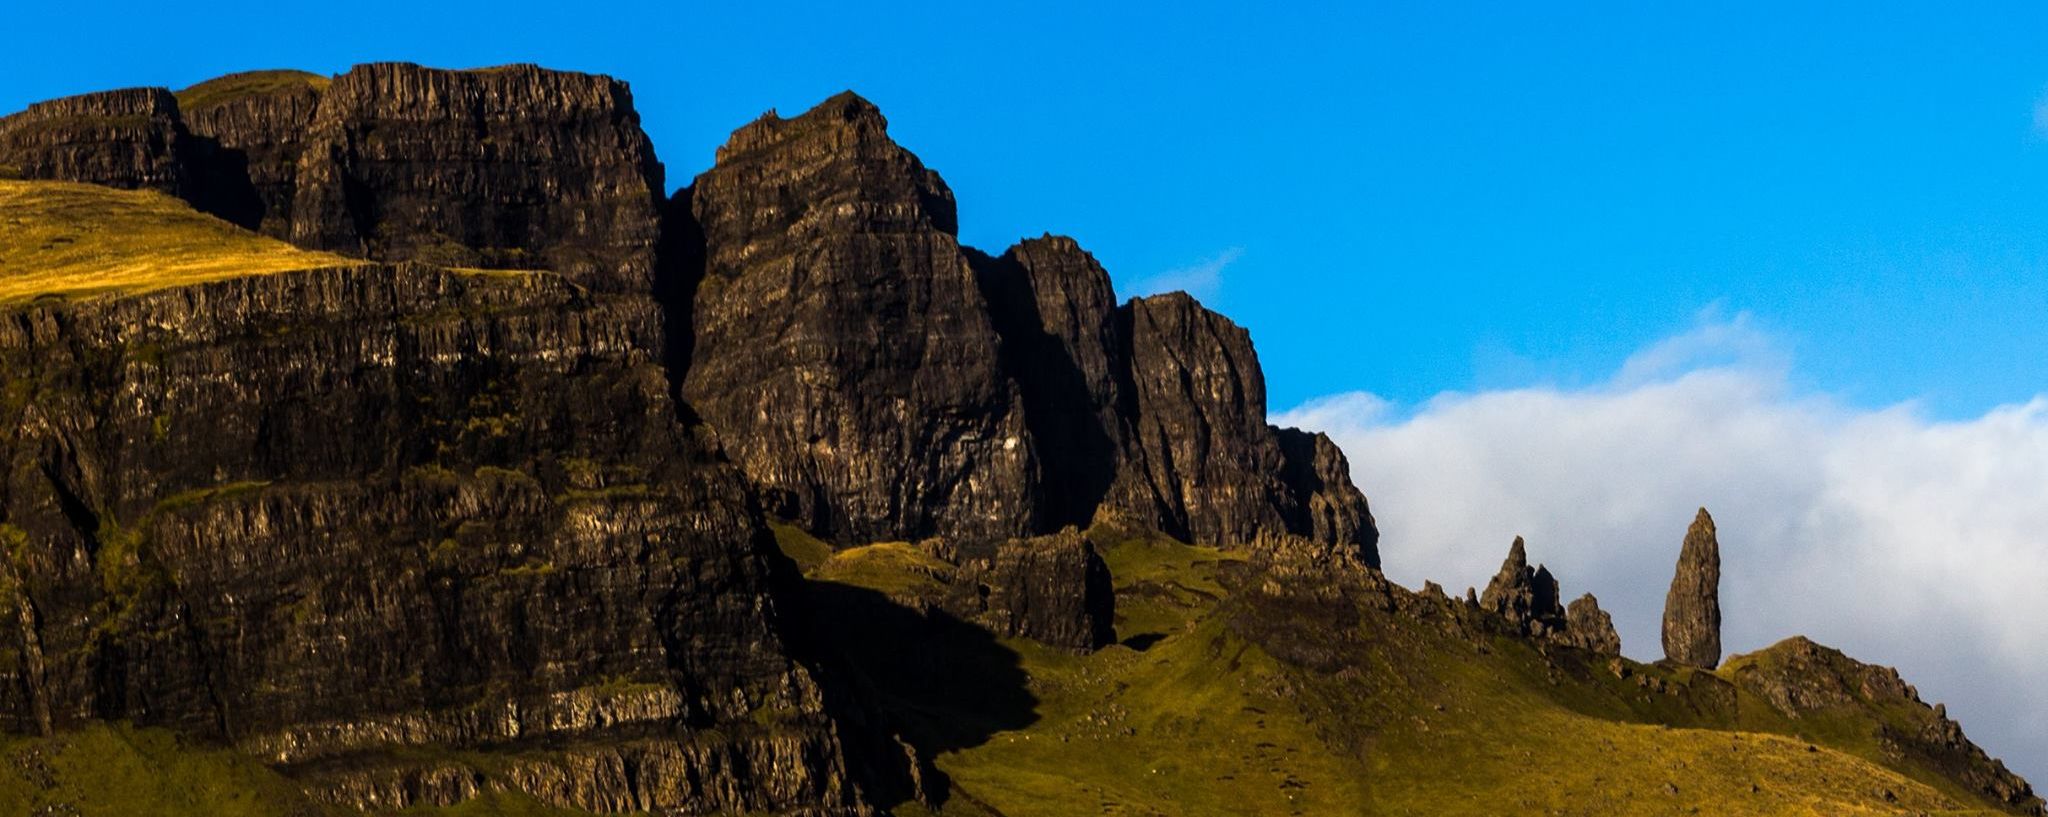 Trotternish Ridge and The Storr on Isle of Skye